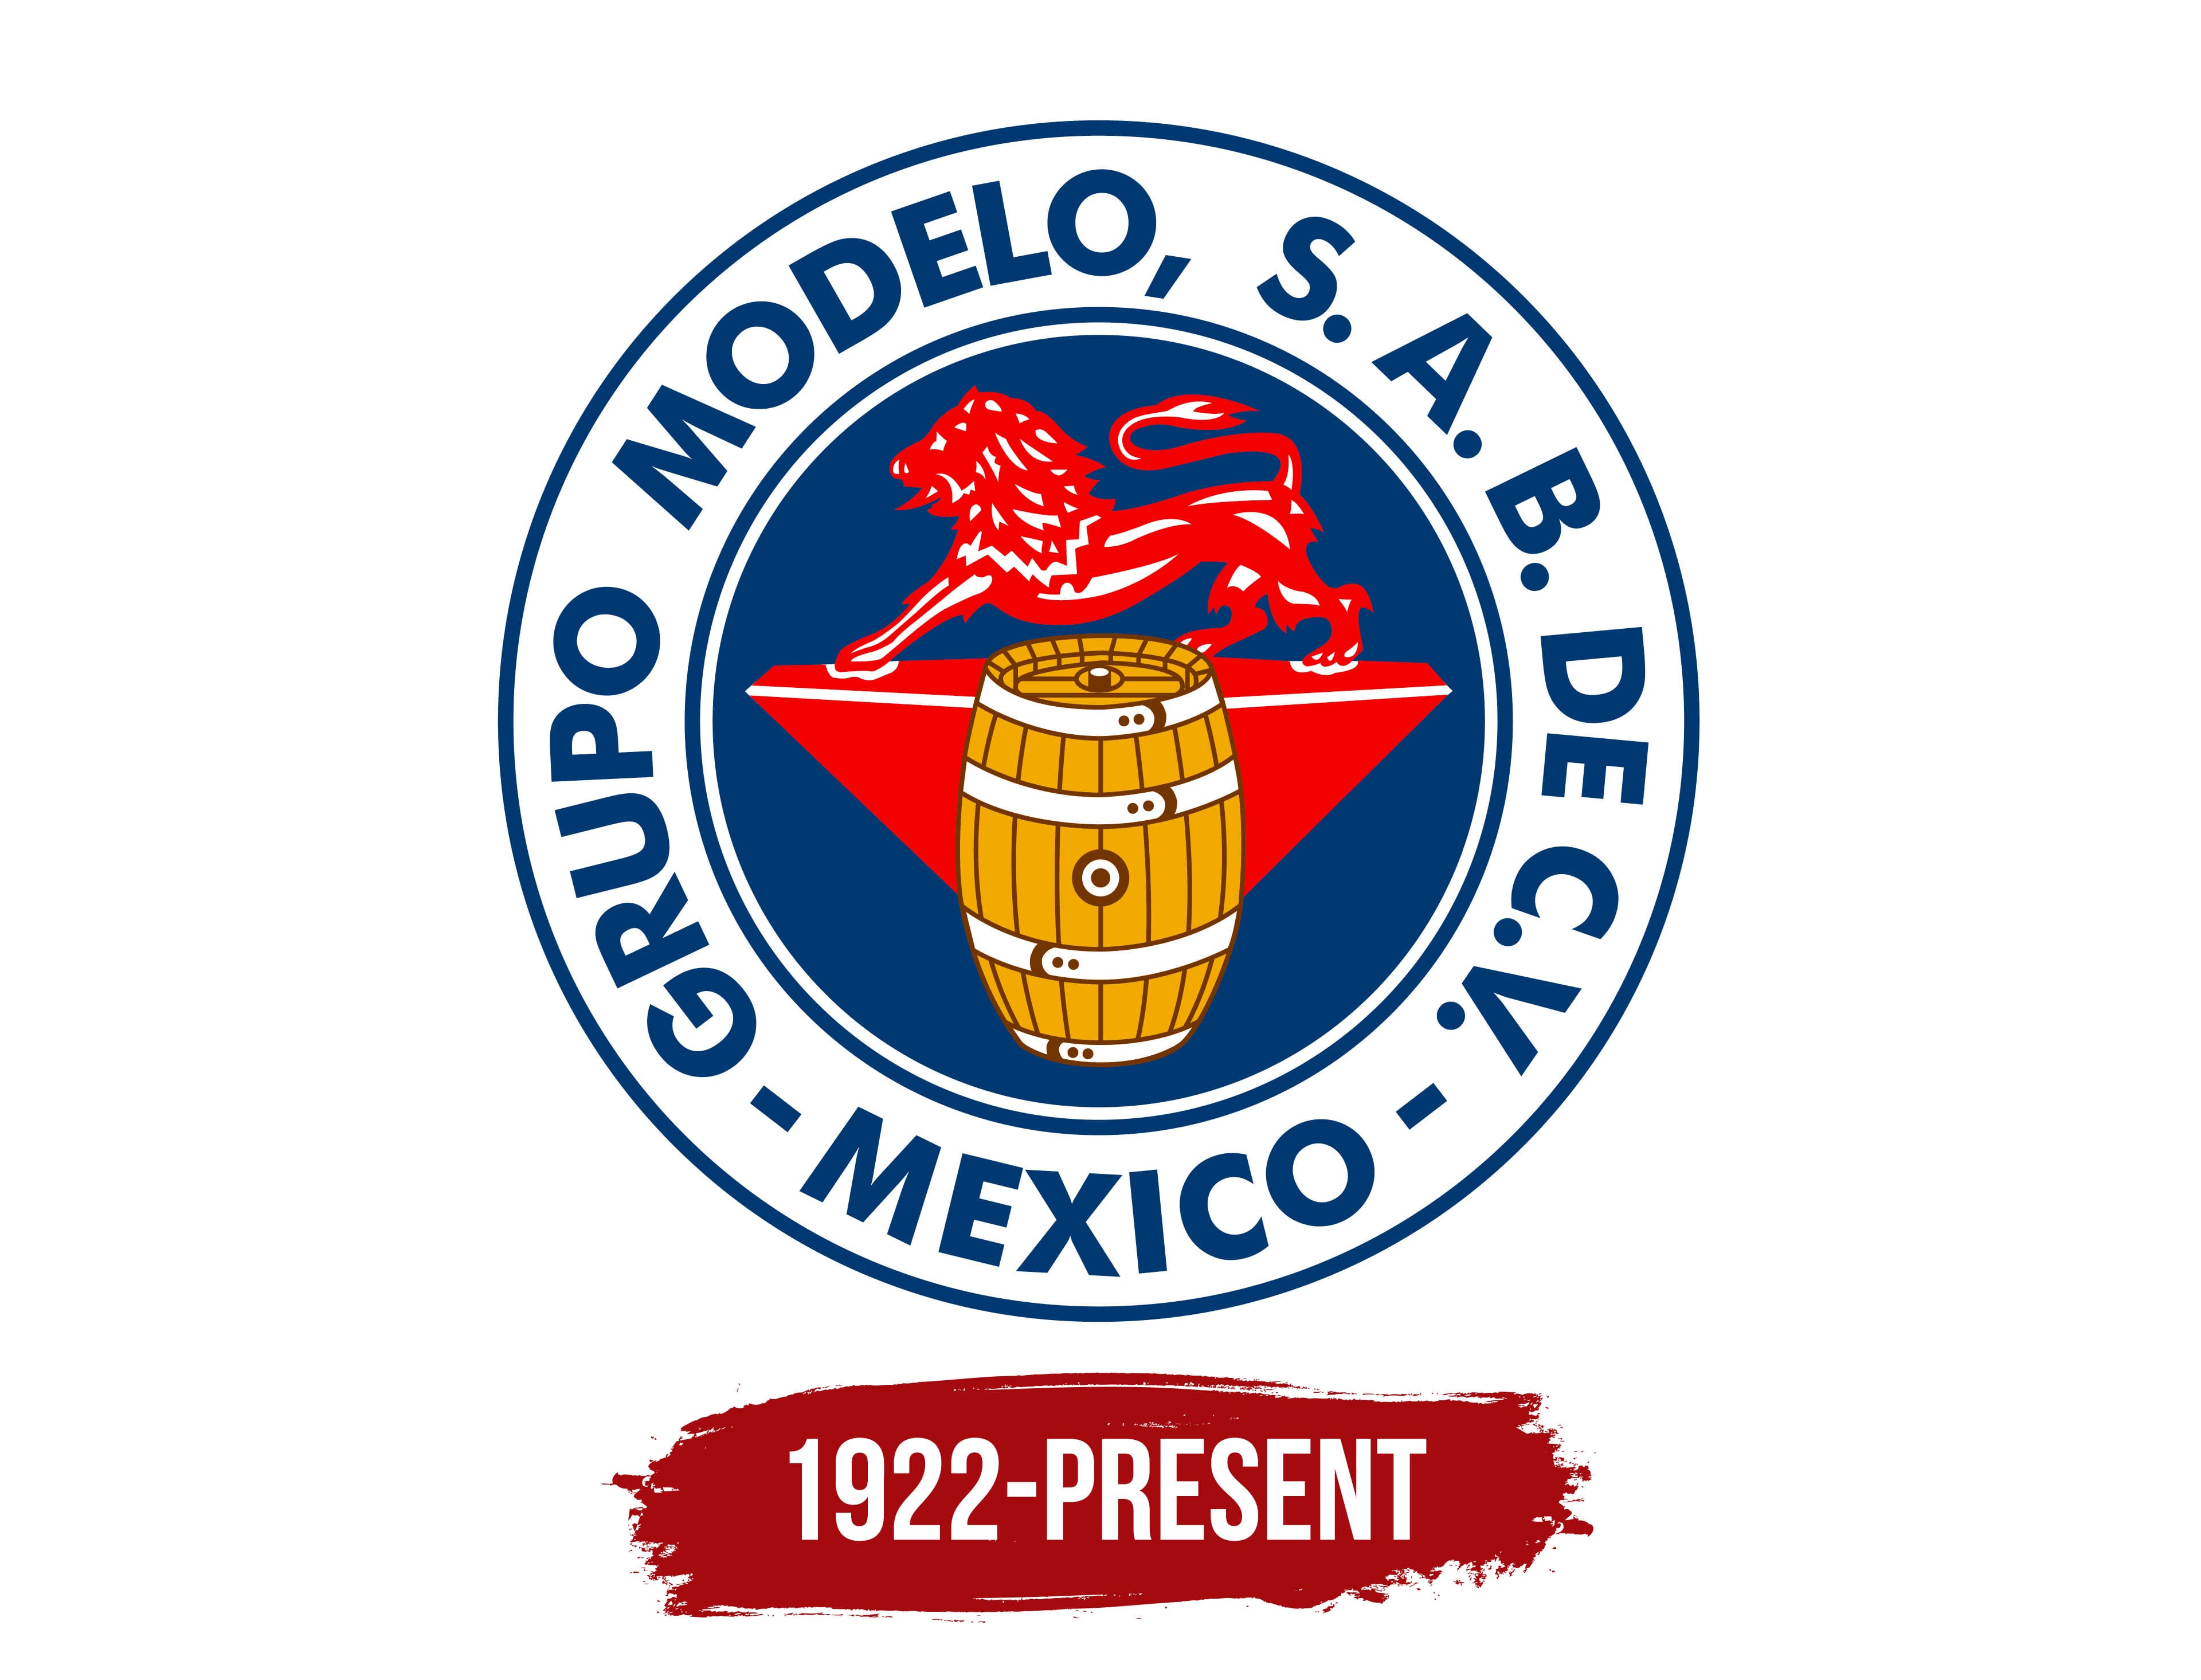 Grupo Modelo Logo, symbol, meaning, history, PNG, brand